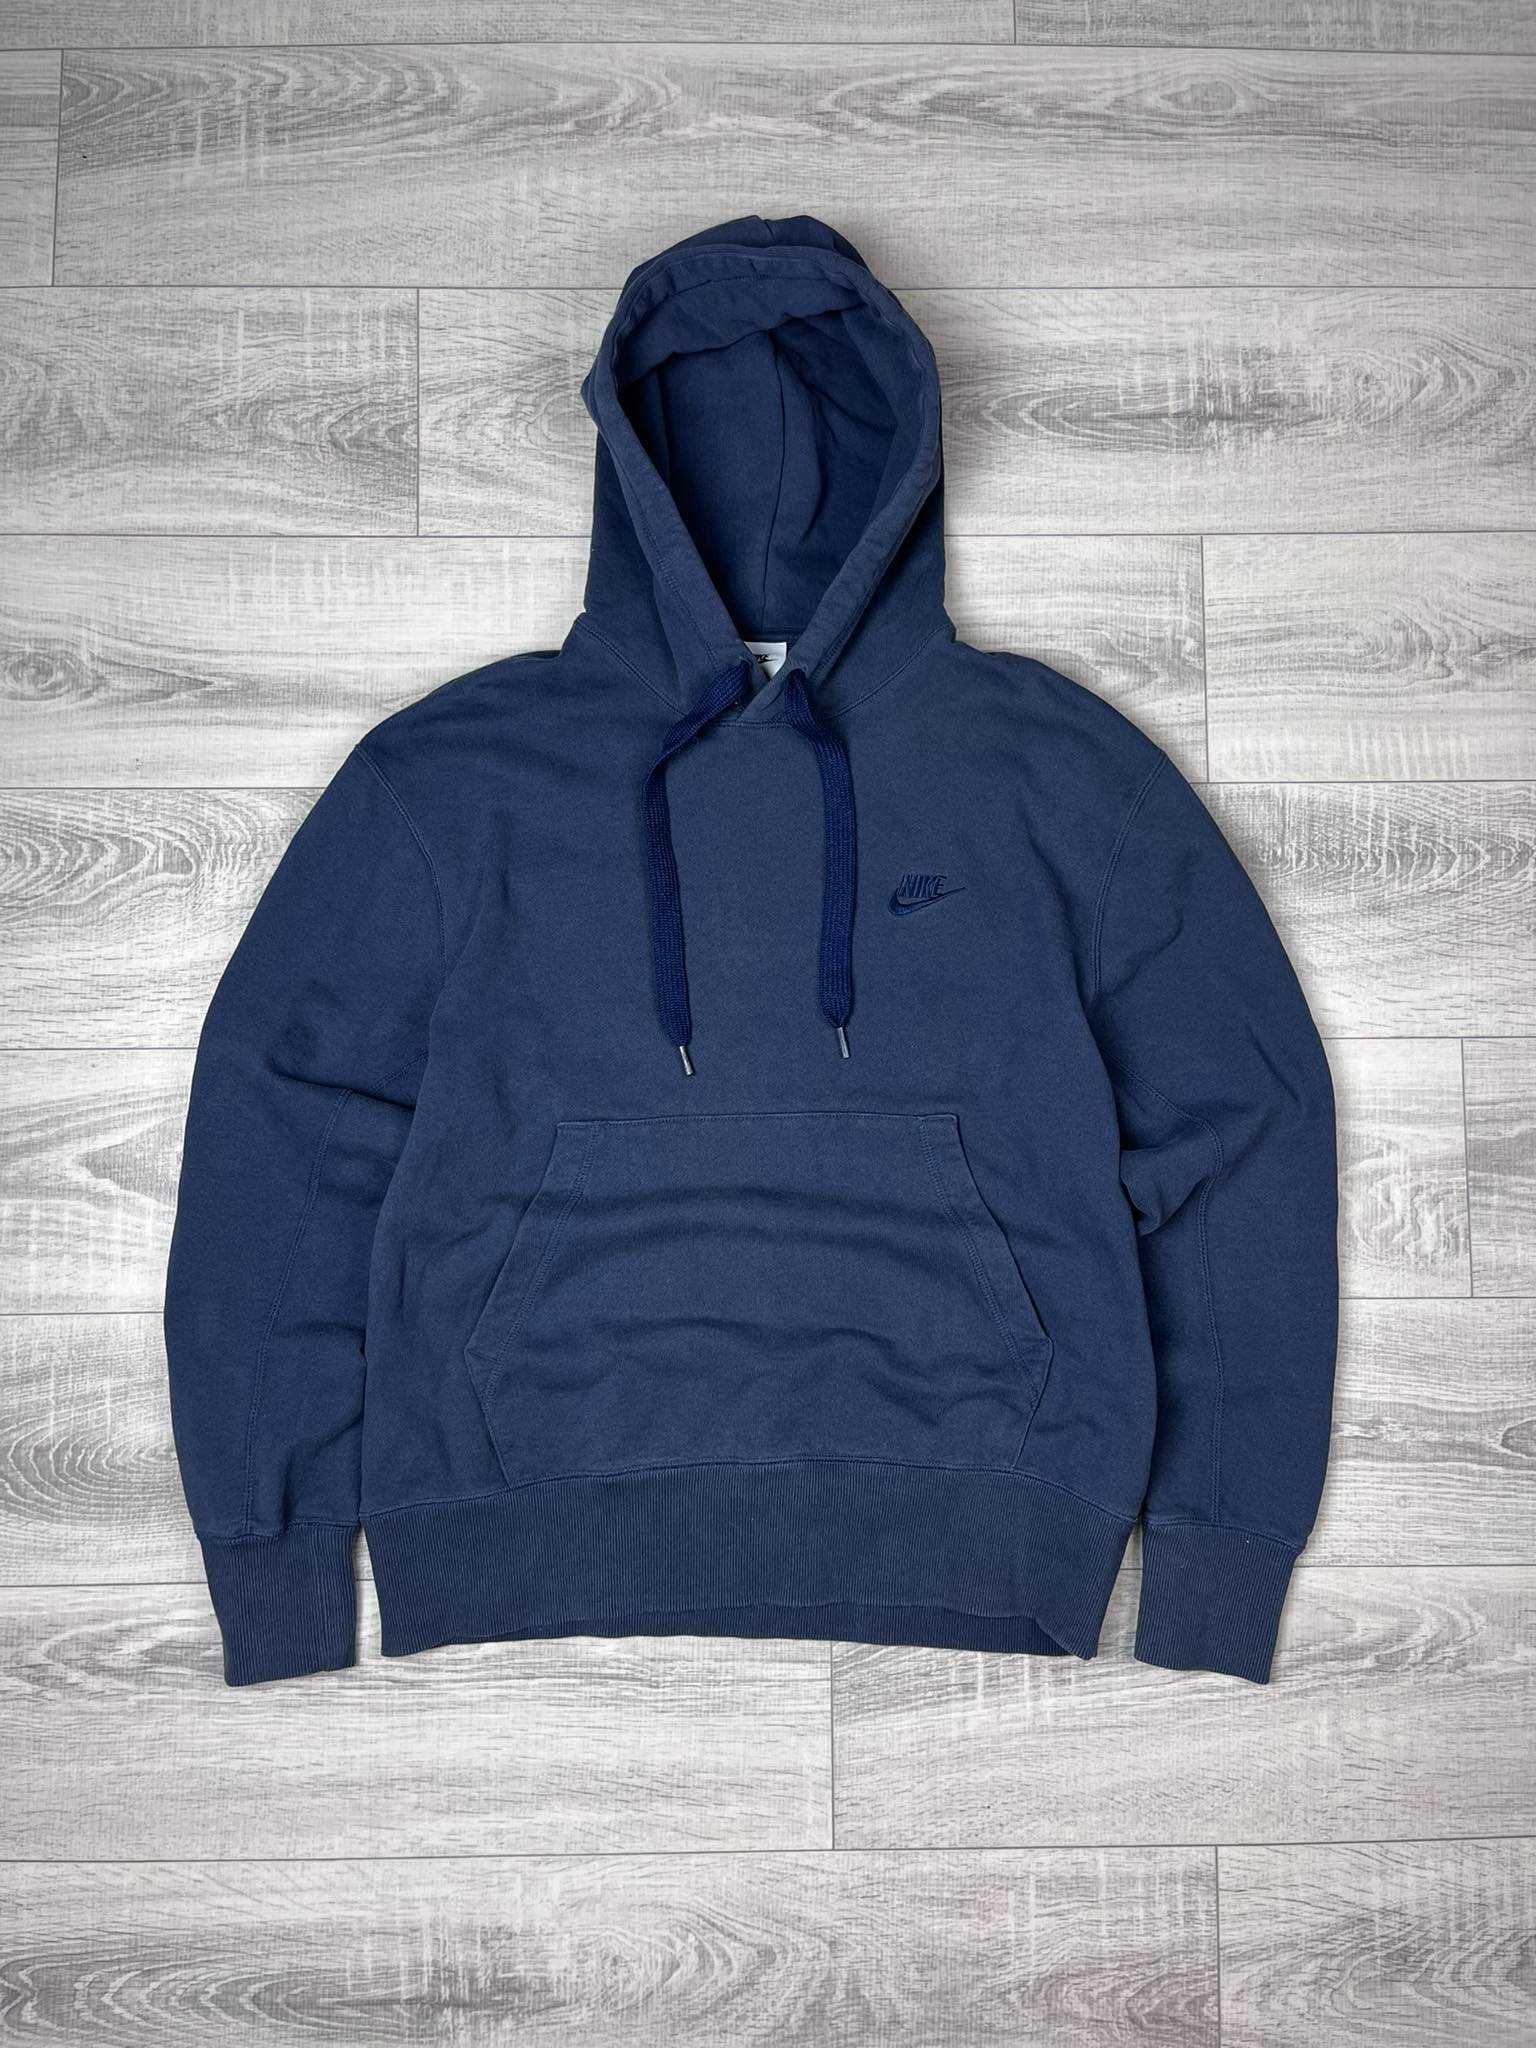 Bluza męska hoodie Nike Vintage z kapturem haft logo Retro niebieska